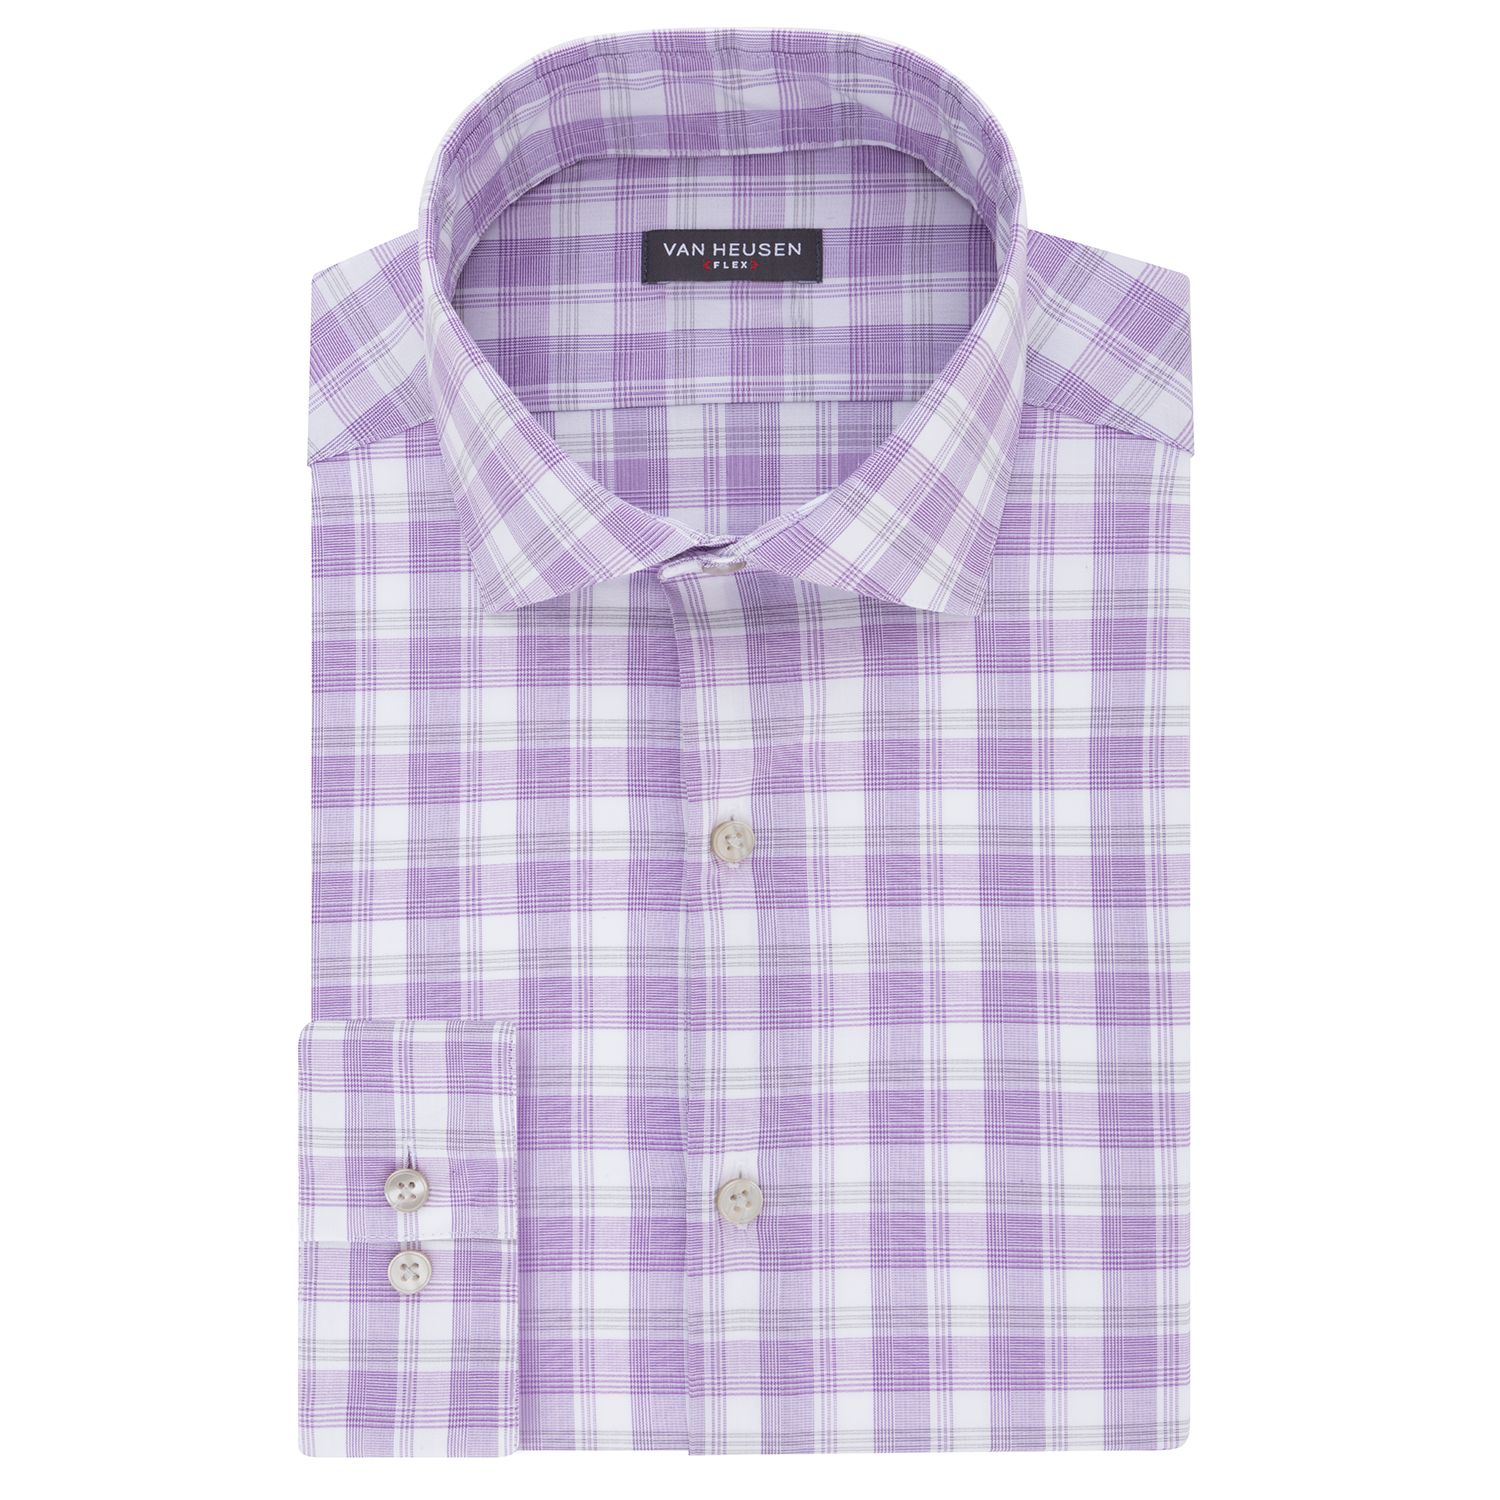 Men's Purple Dress Shirts: Add a Pop of ...